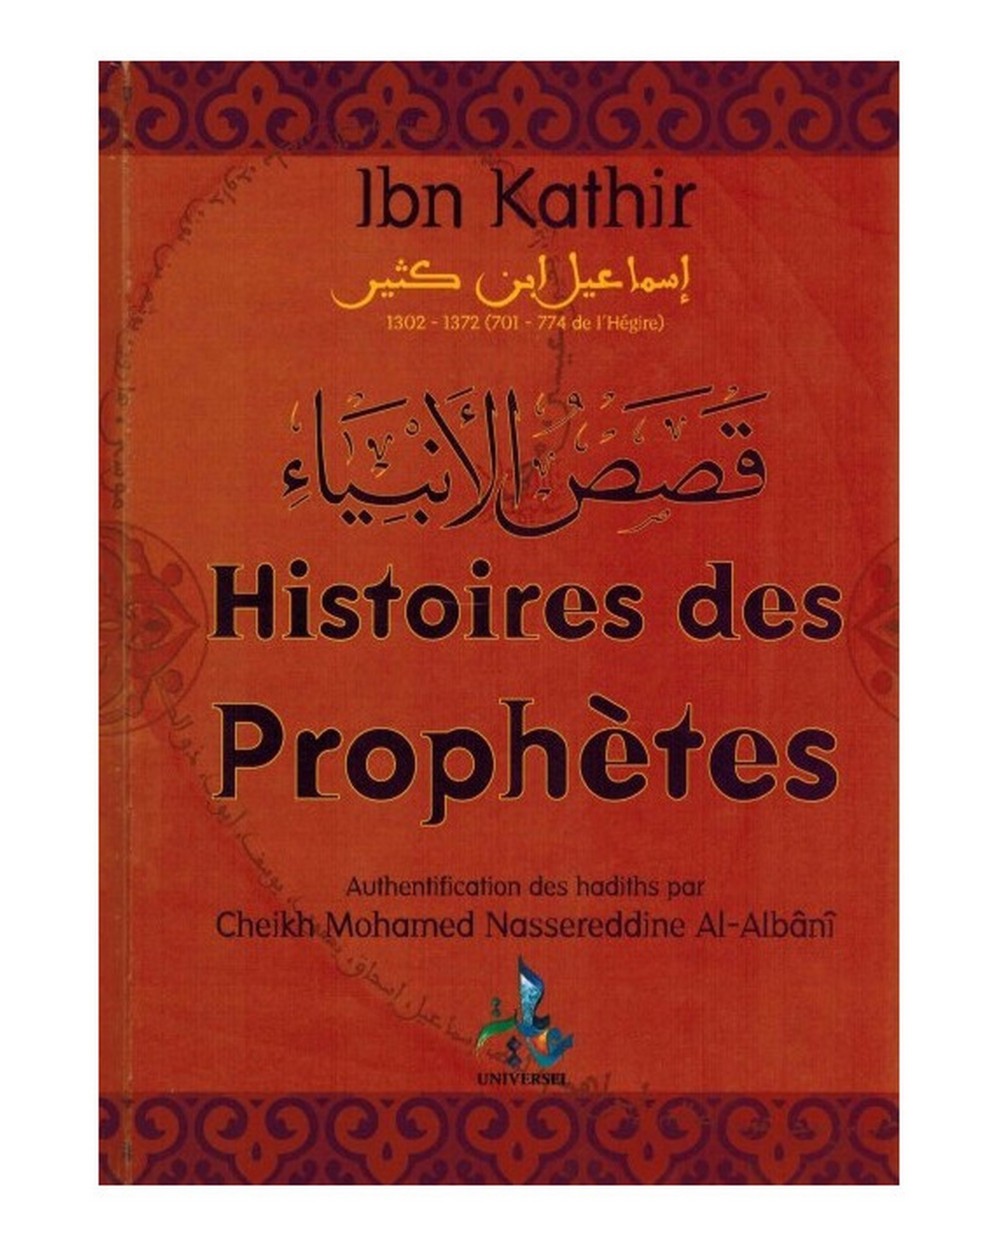 Stories of the Prophets - Ibn Kathir - Universal